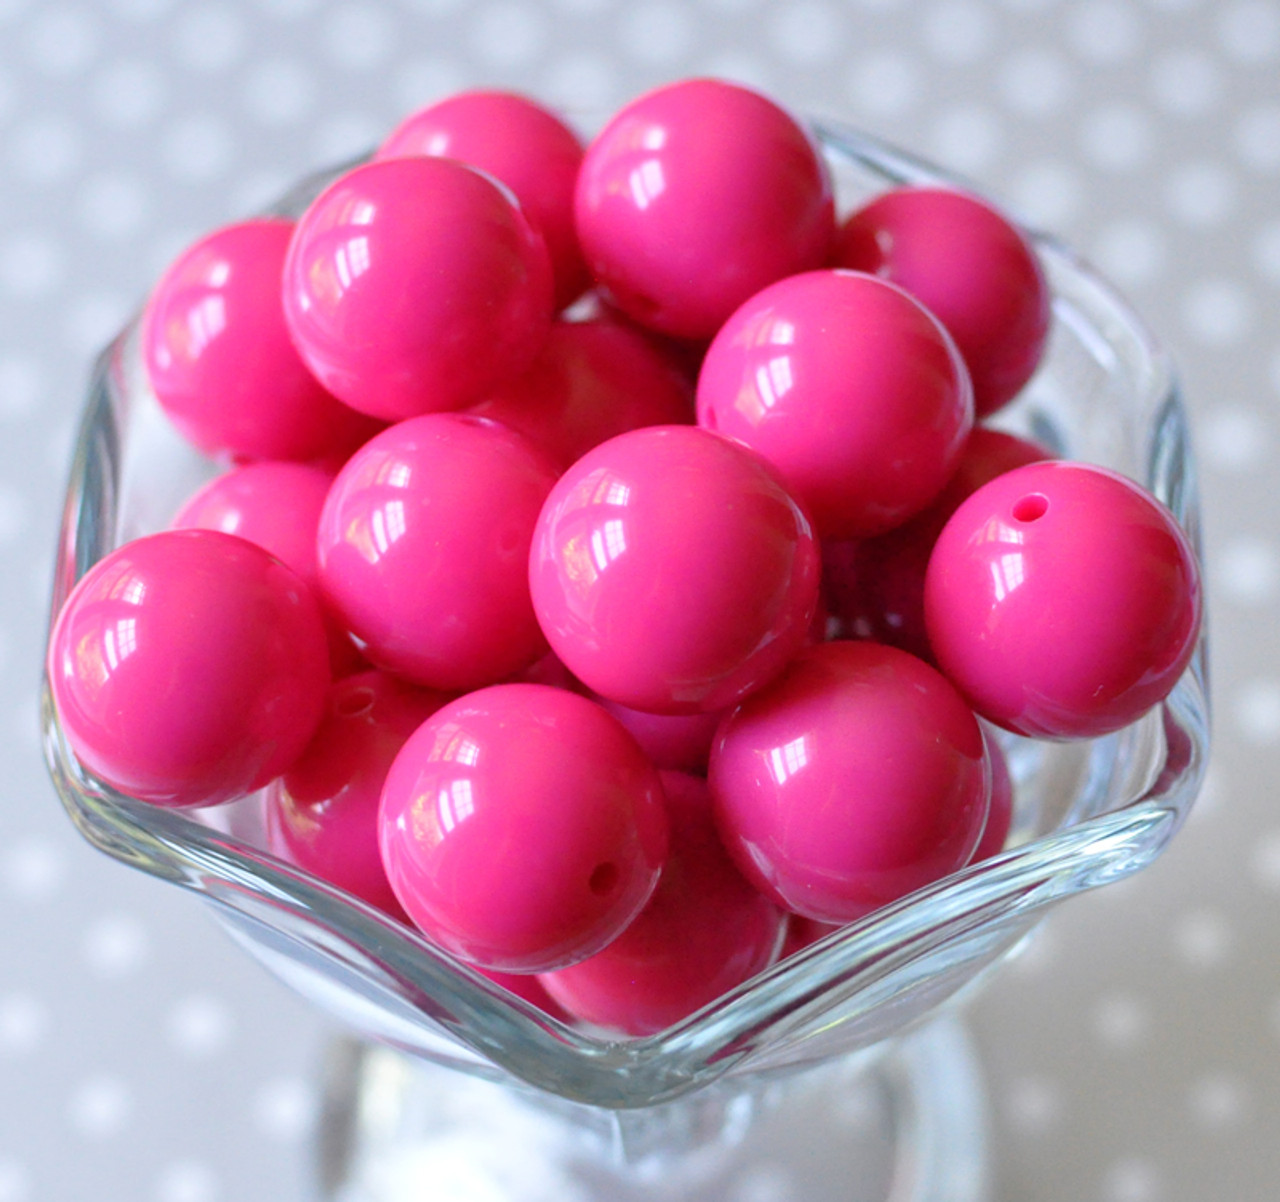 20mm Pink Glitter Tinsel Bubblegum Beads